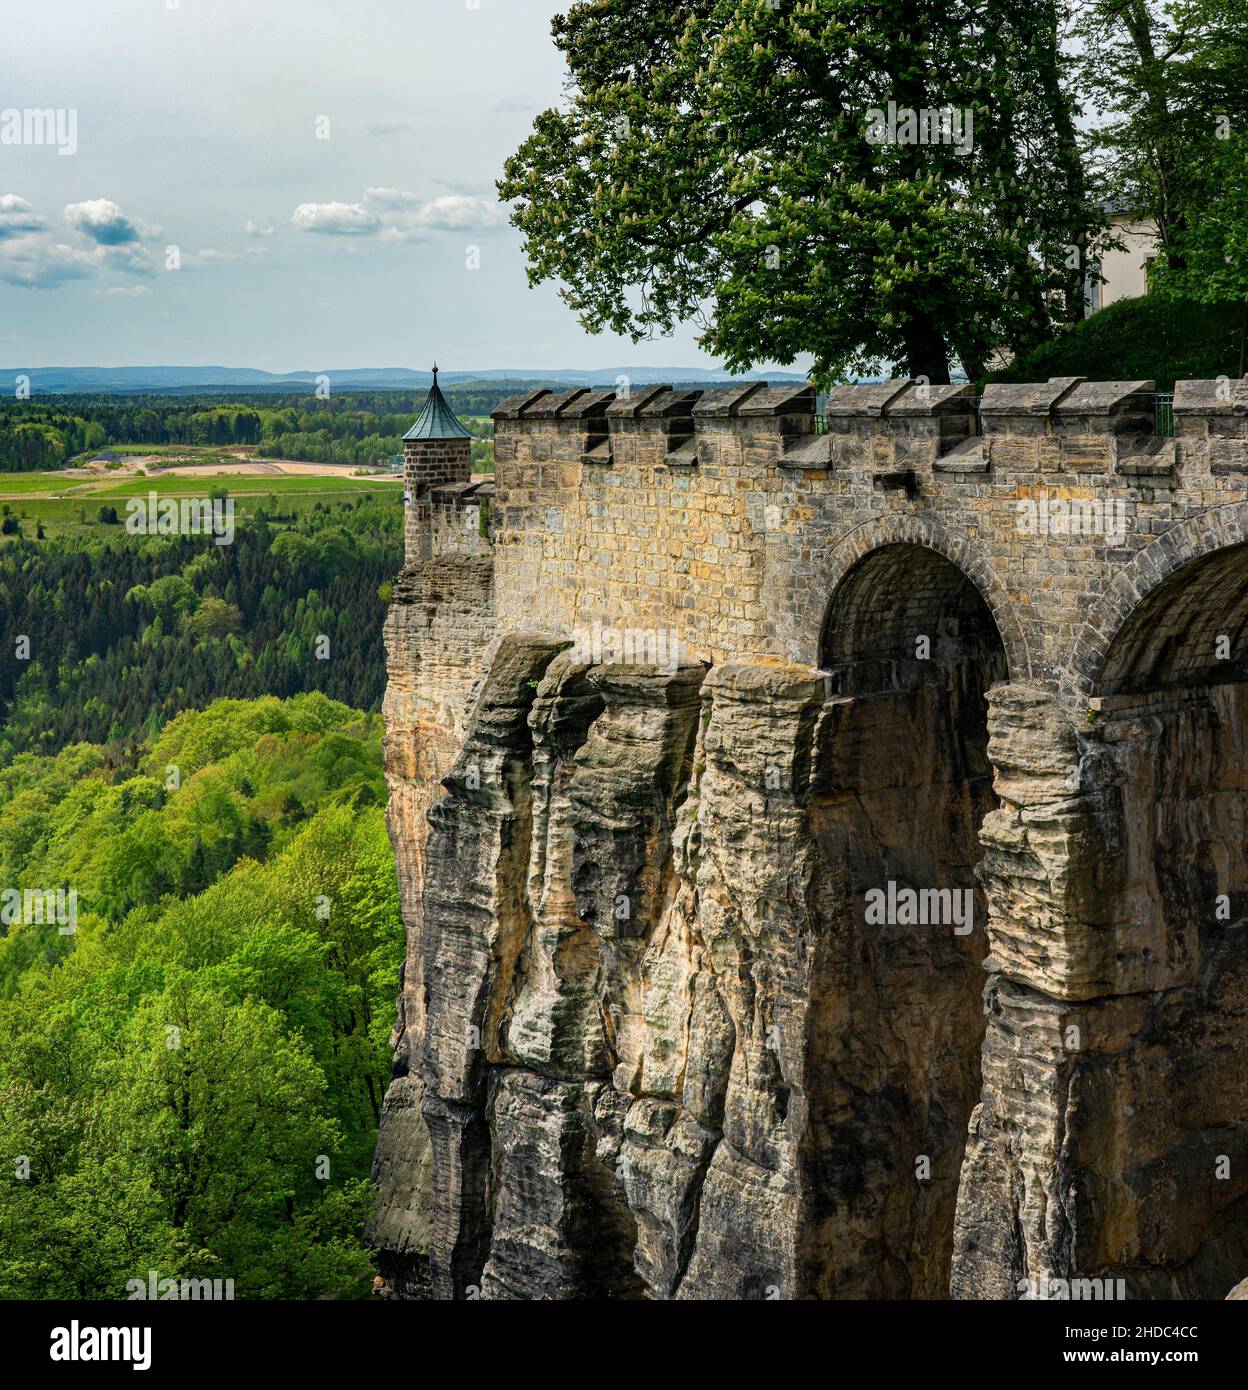 The Abratzky Chimney at Koenigstein Fortress in Saxon Switzerland, Koenigstein, Saxony, Germany Stock Photo